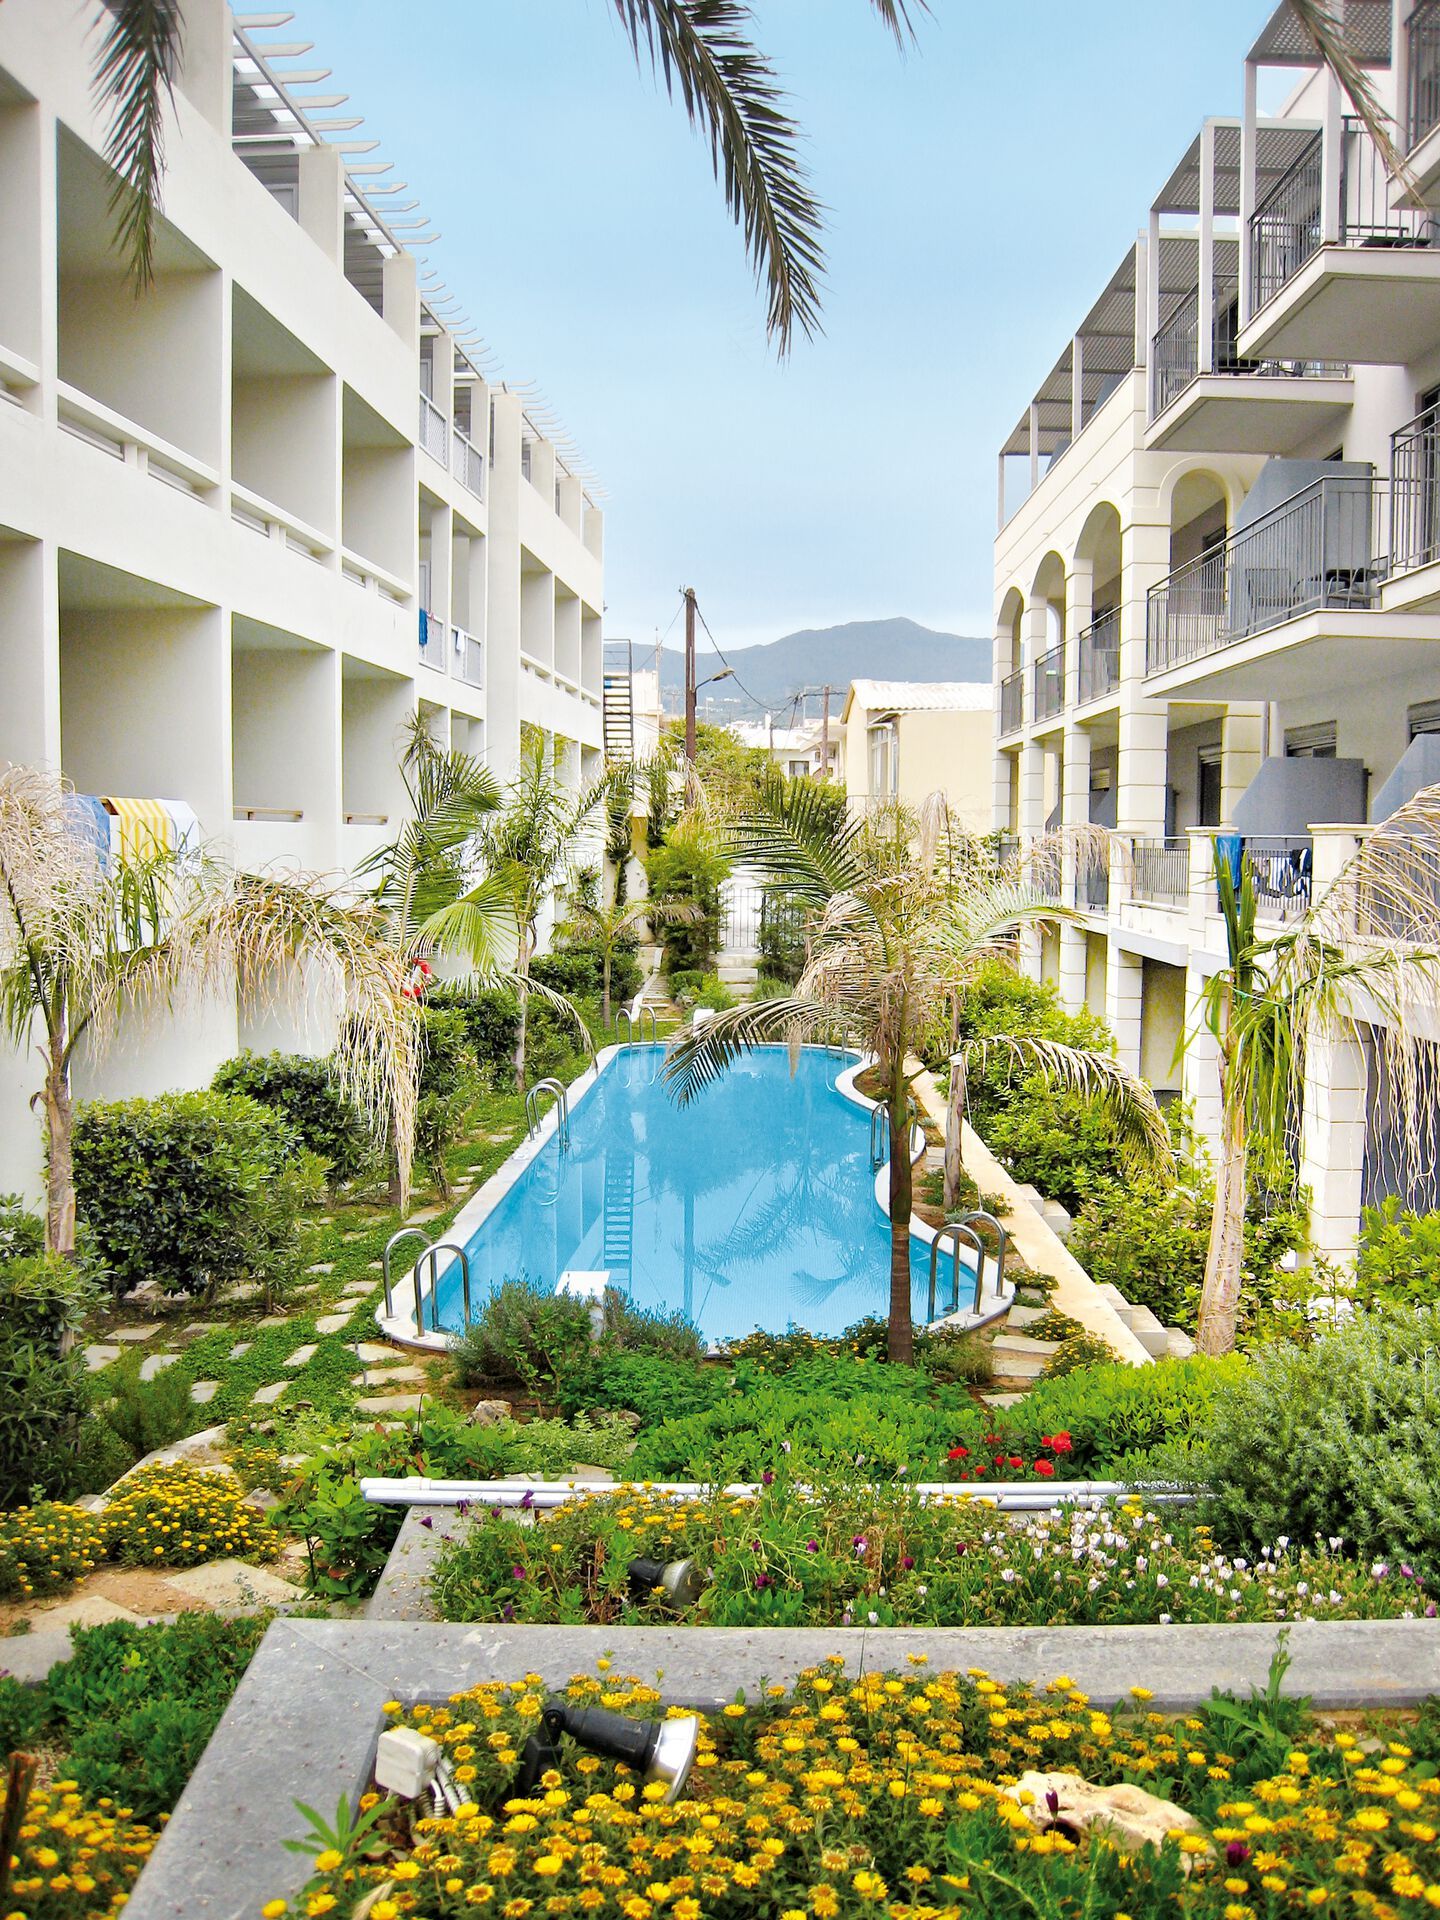 Crète - Rethymnon - Grèce - Iles grecques - Hotel Pearl Beach 4*